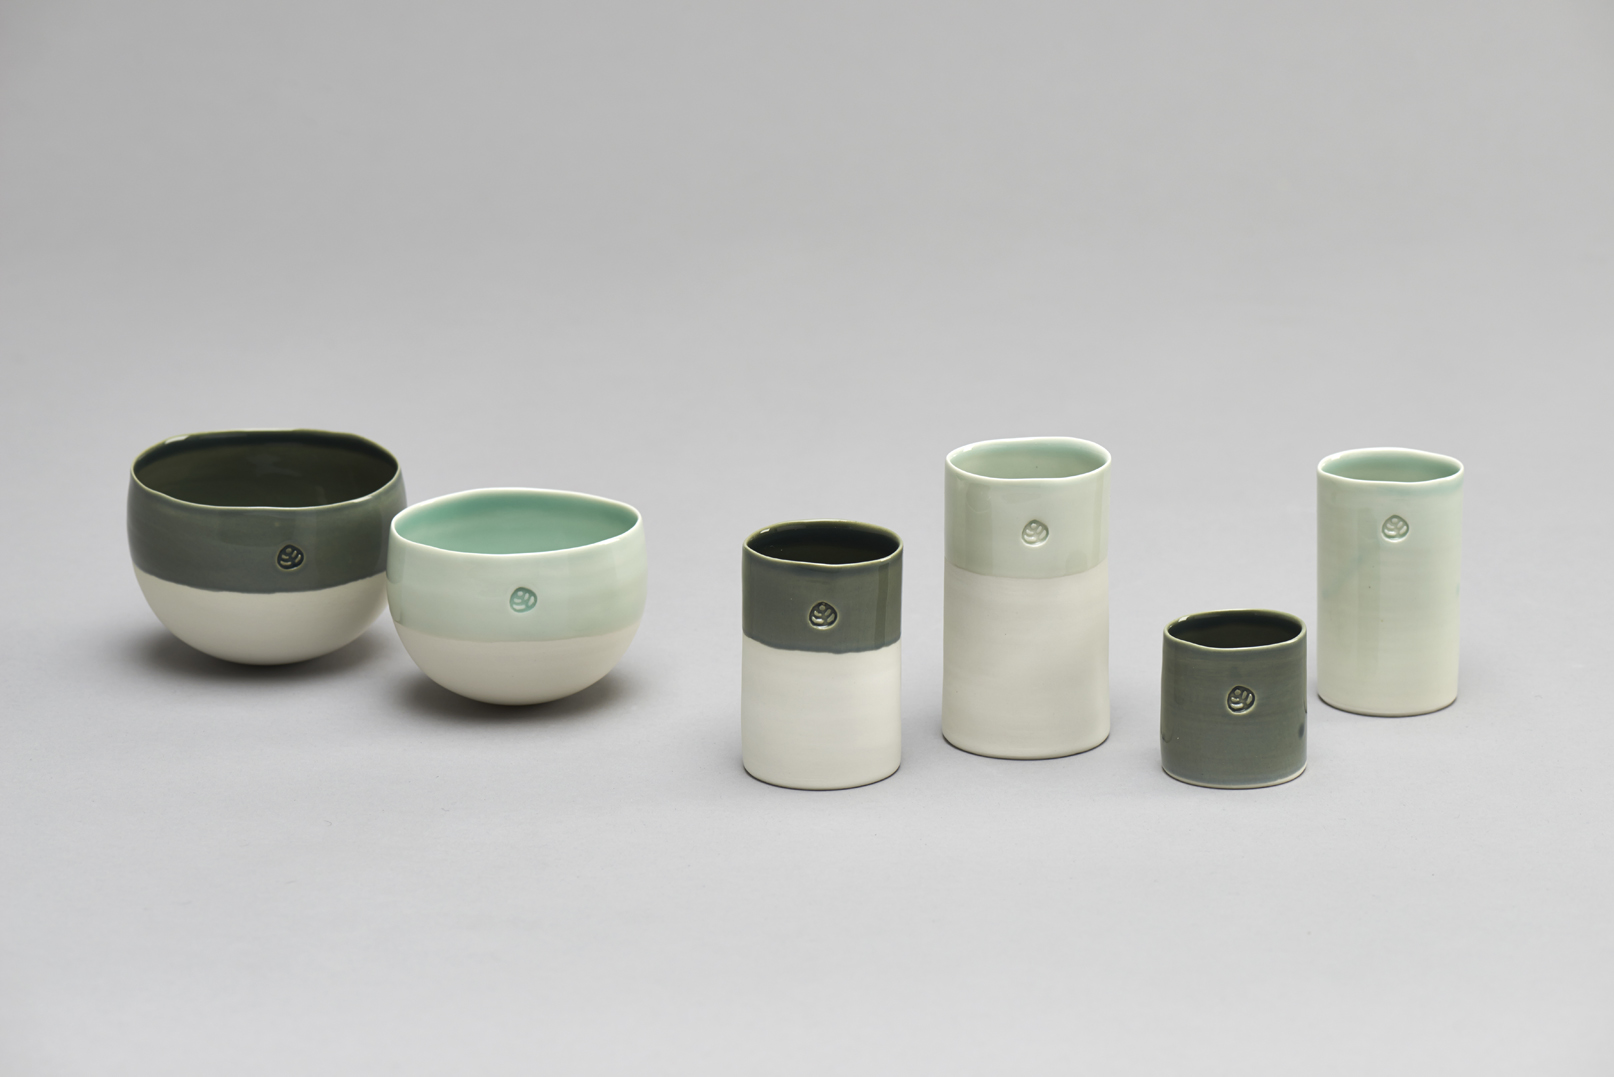 a4_mdba_mdby_ceramics_porcelain_manufactured_nathalie_derouet